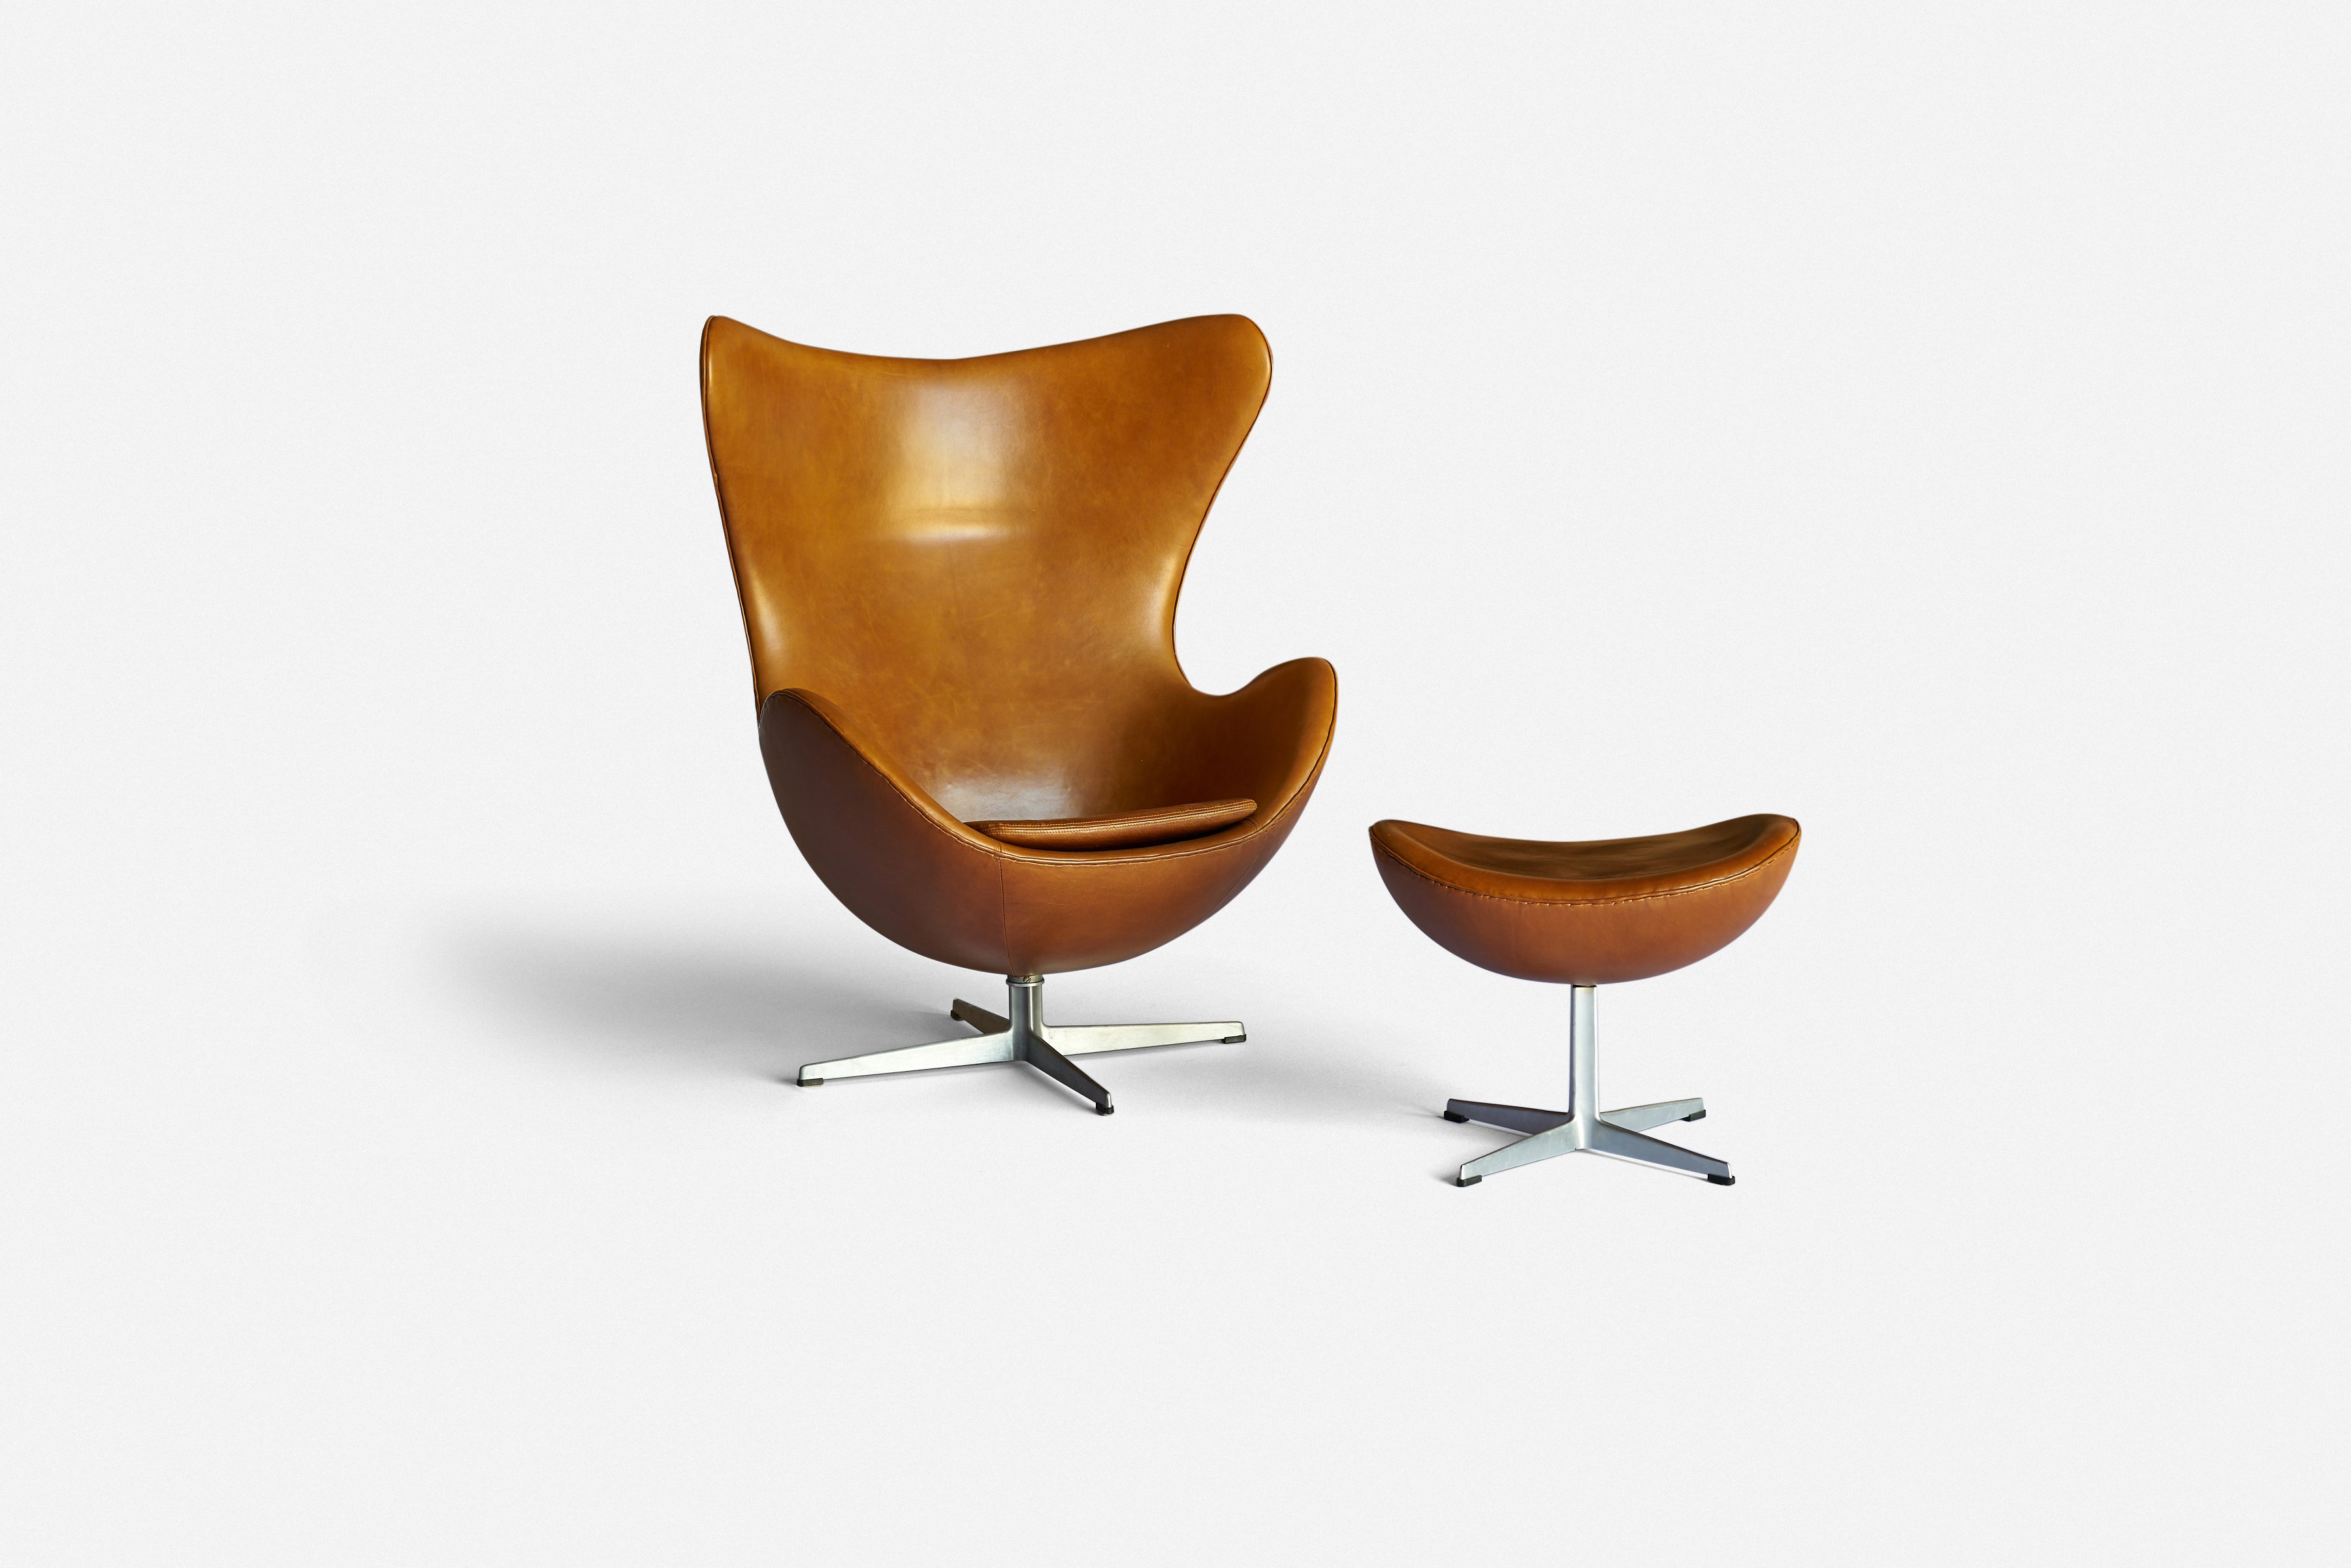 Arne Jacobsen
Chair and ottoman
Fritz Hansen
Denmark, 1958
Leather, cast aluminum, plastic
34 d x 32 d x 42 h inches

Foil label to base.